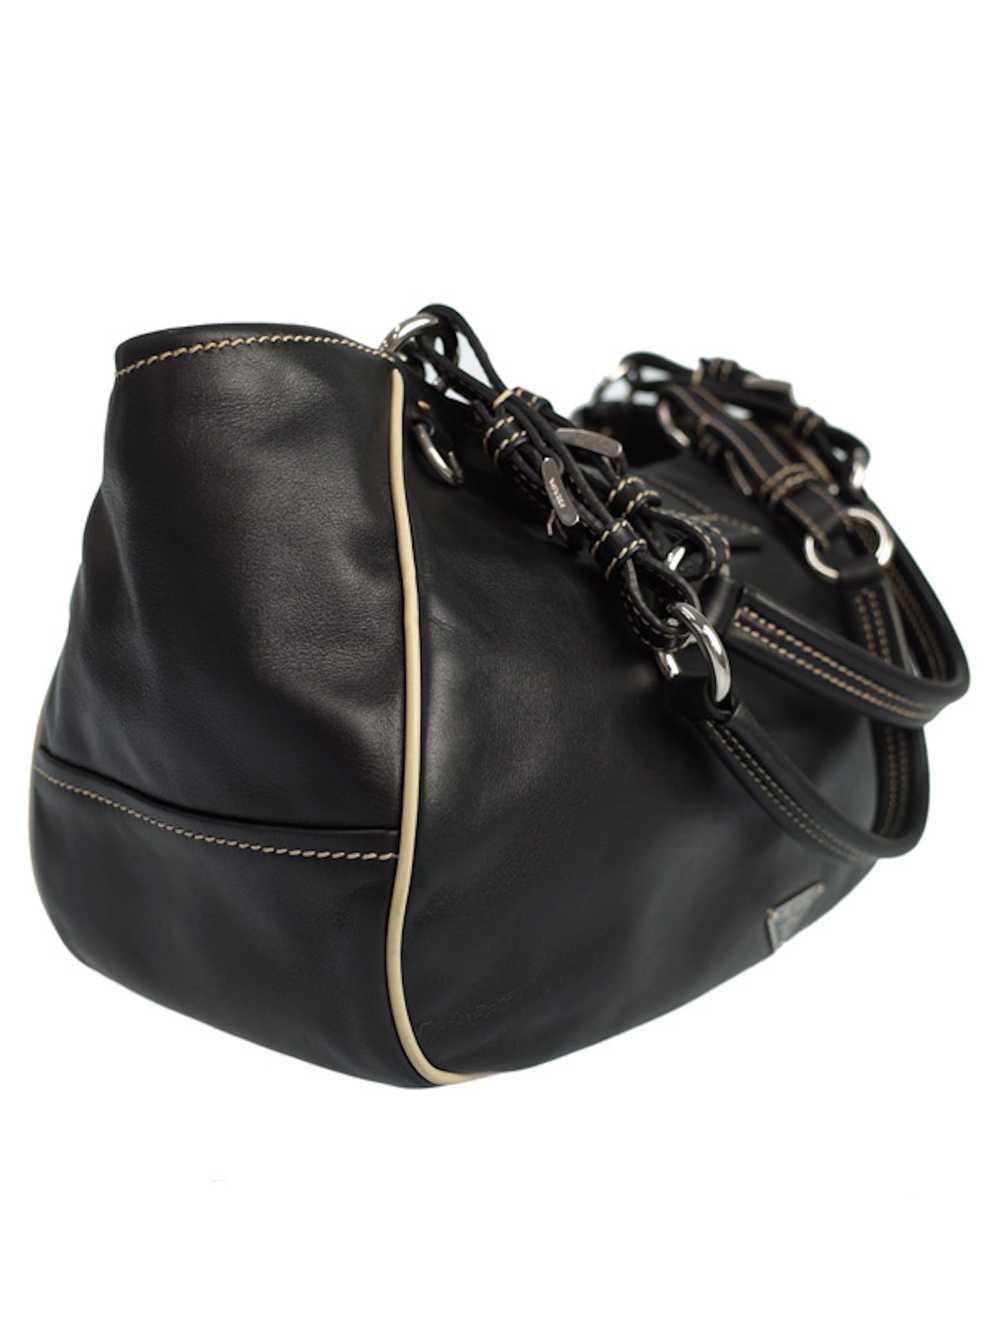 Prada Prada Leather Shoulder Bag Black - image 2